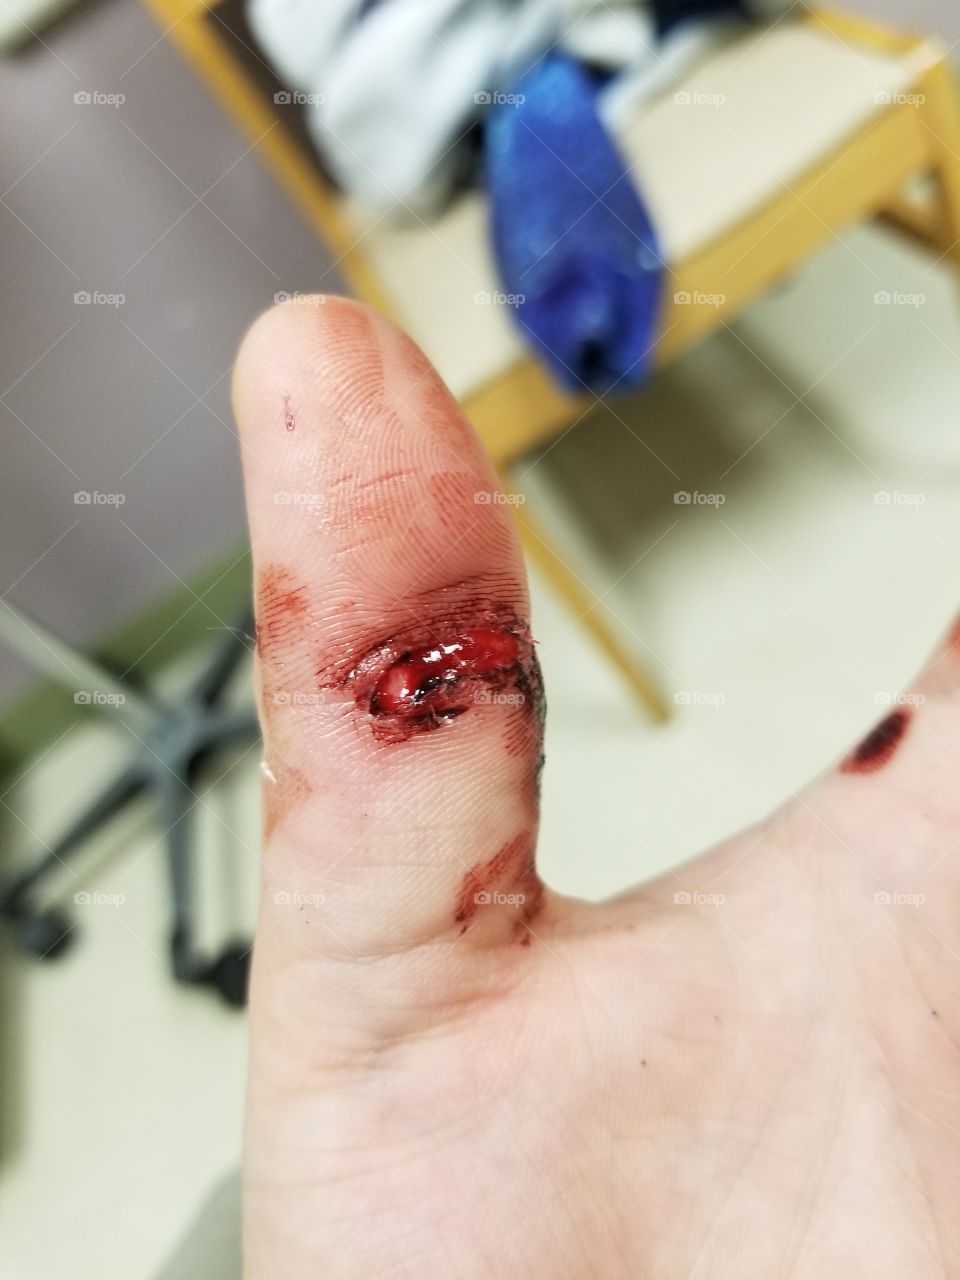 my broken thumb